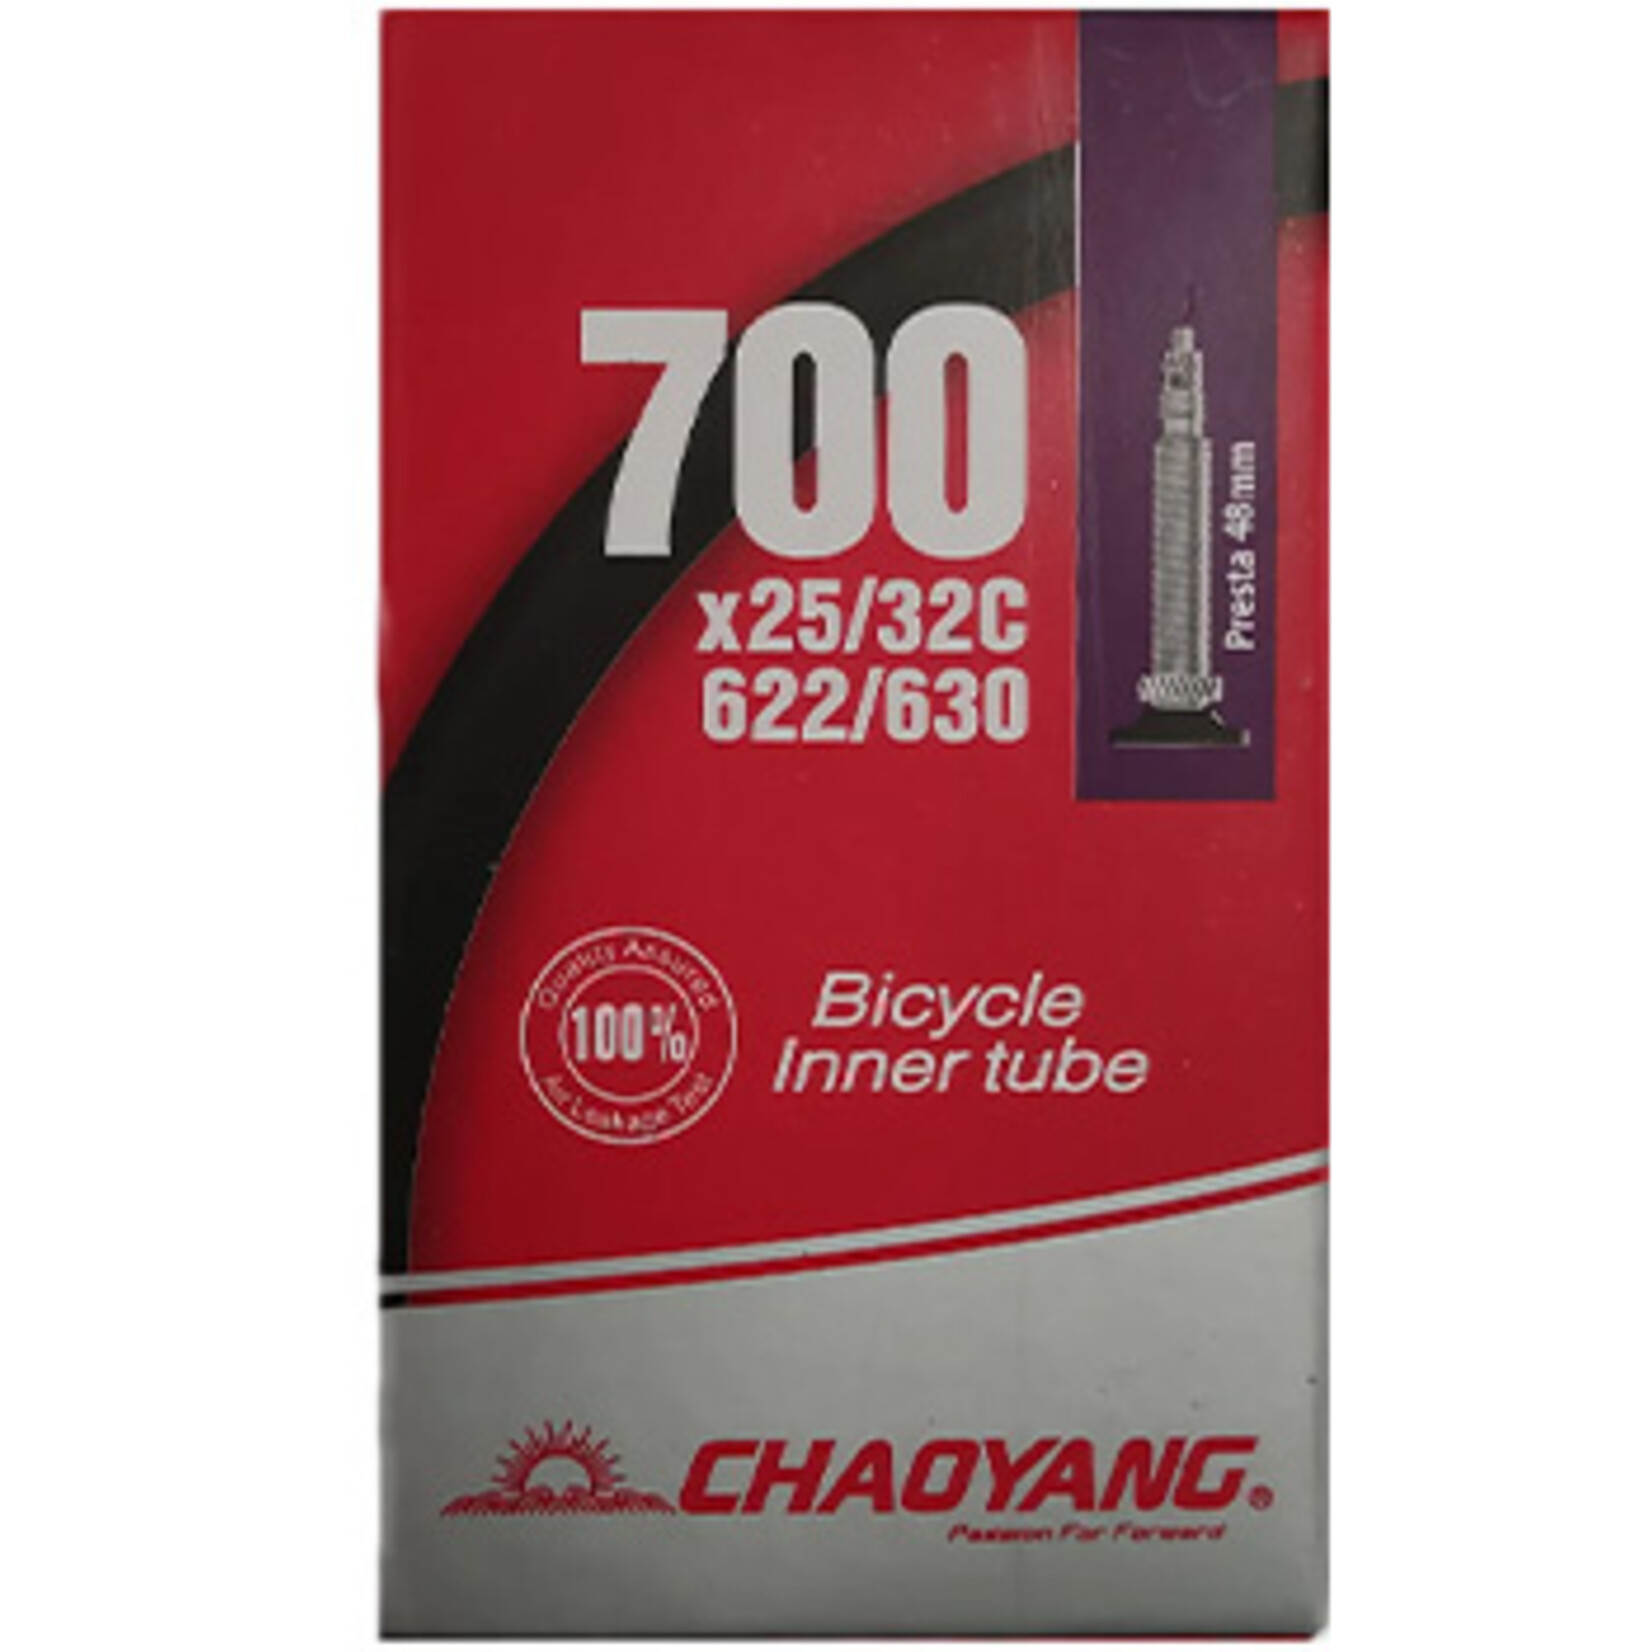 CHAOYANG 700 x 25/32c RACER TUBE